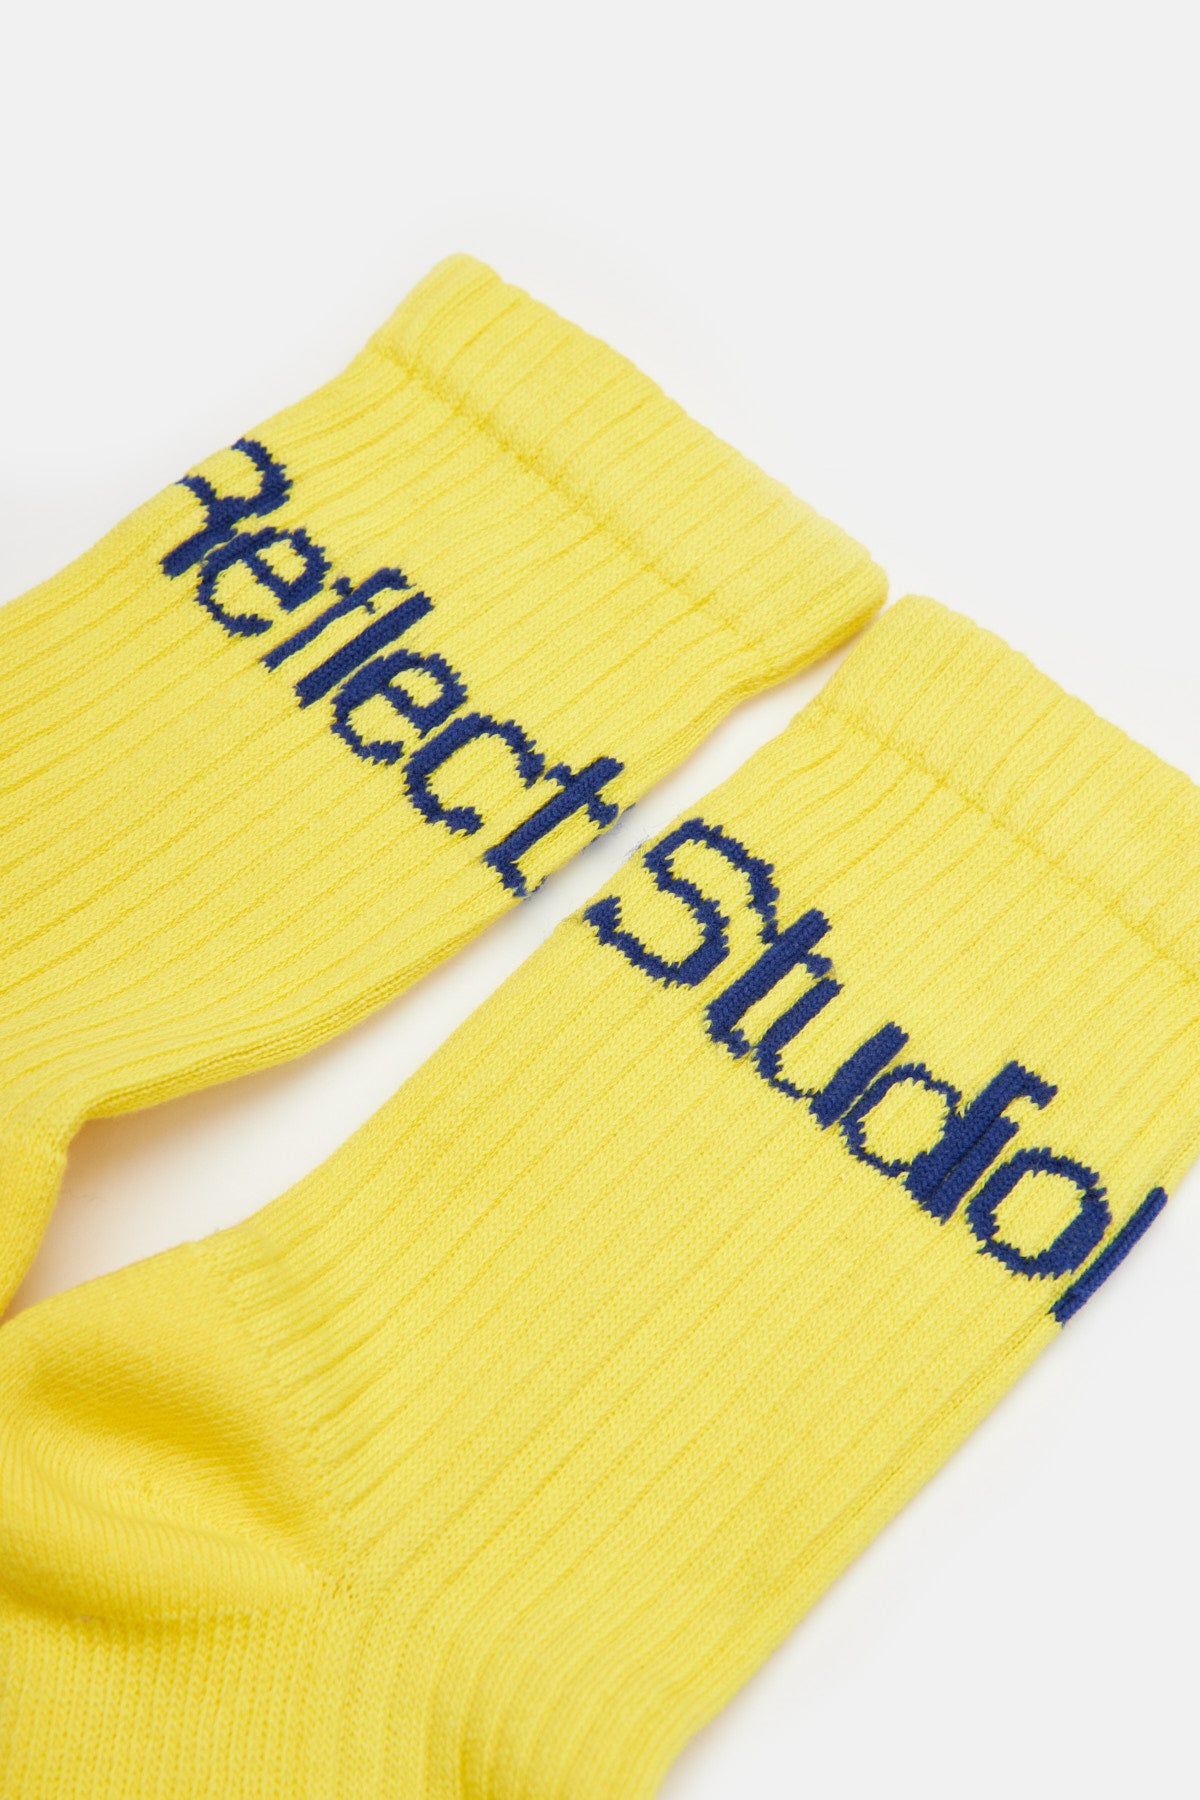 Ribbed Logo Socks - Yellow